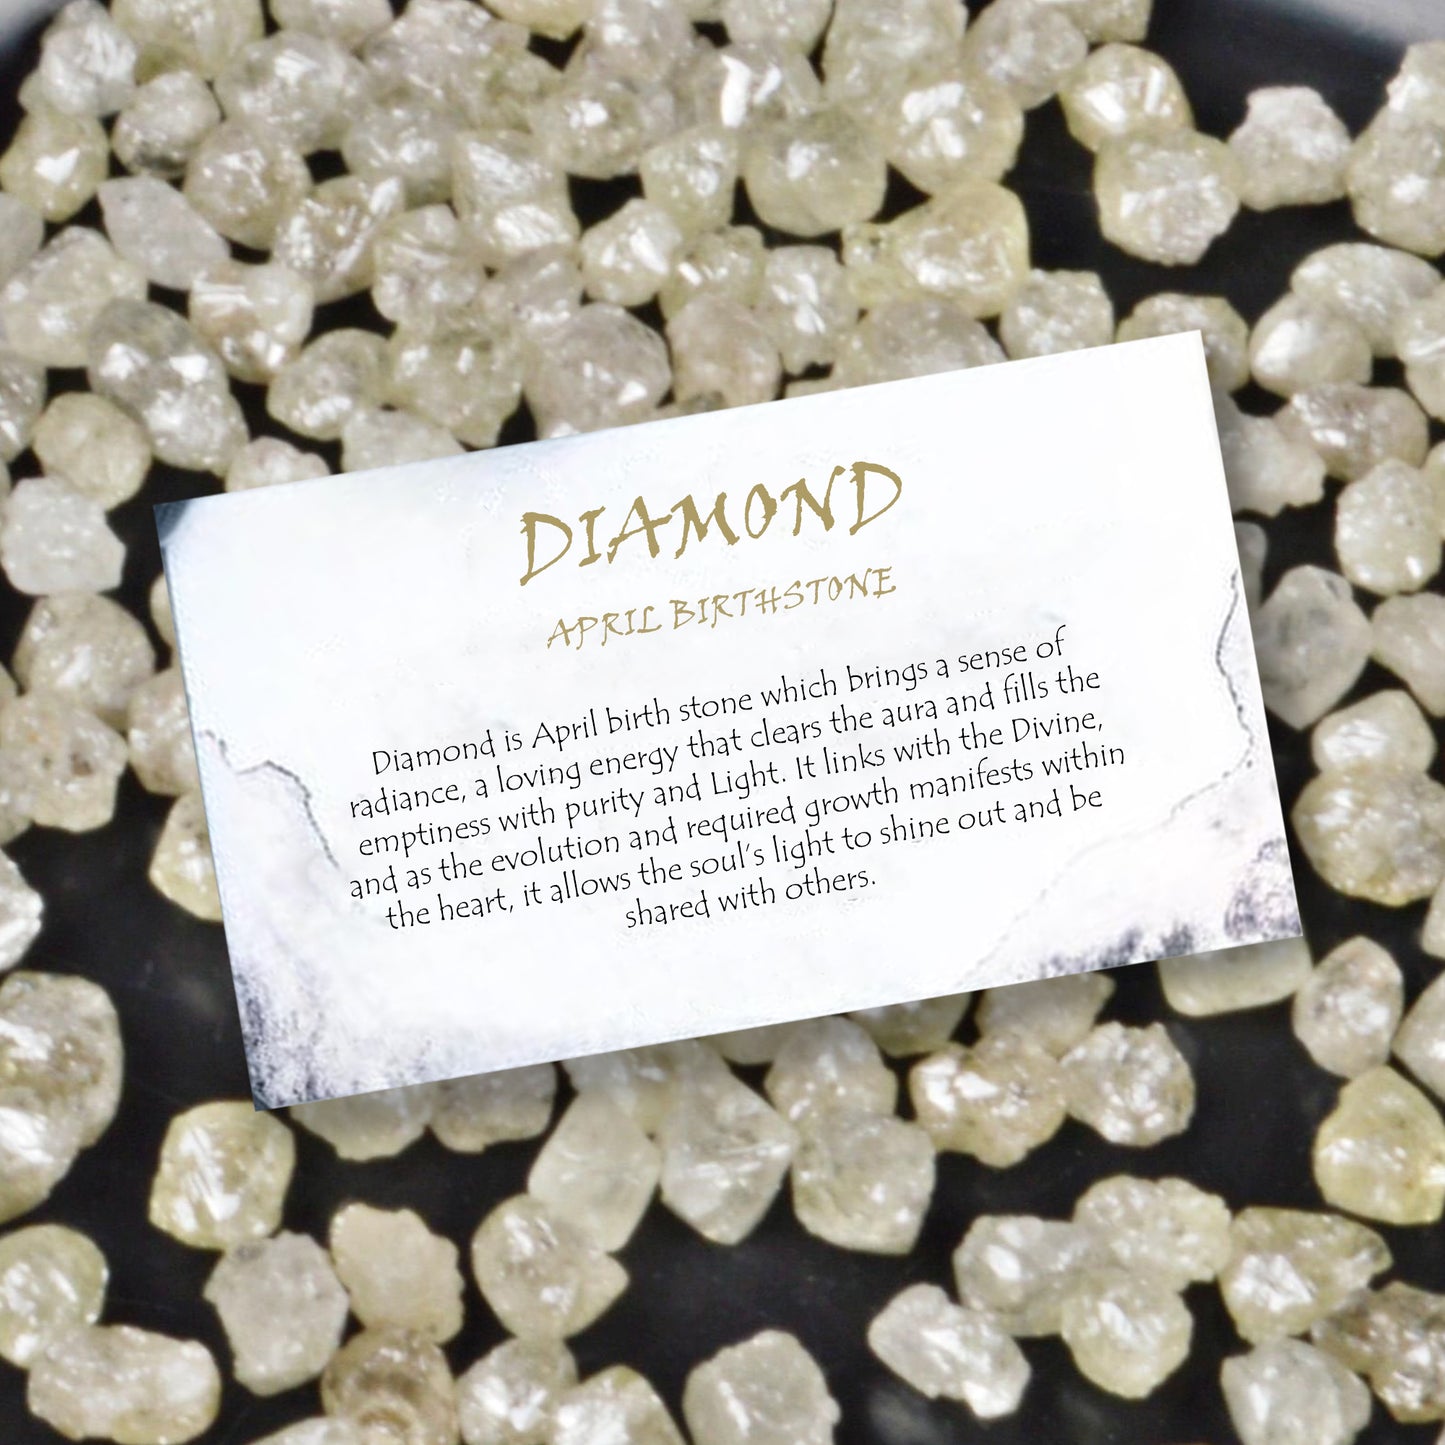 Certified White Diamond Trinity Ring Genuine 14k Real Gold Wedding Ring 3mm Round Cut Gemstone Jewelry For Valentine's Day